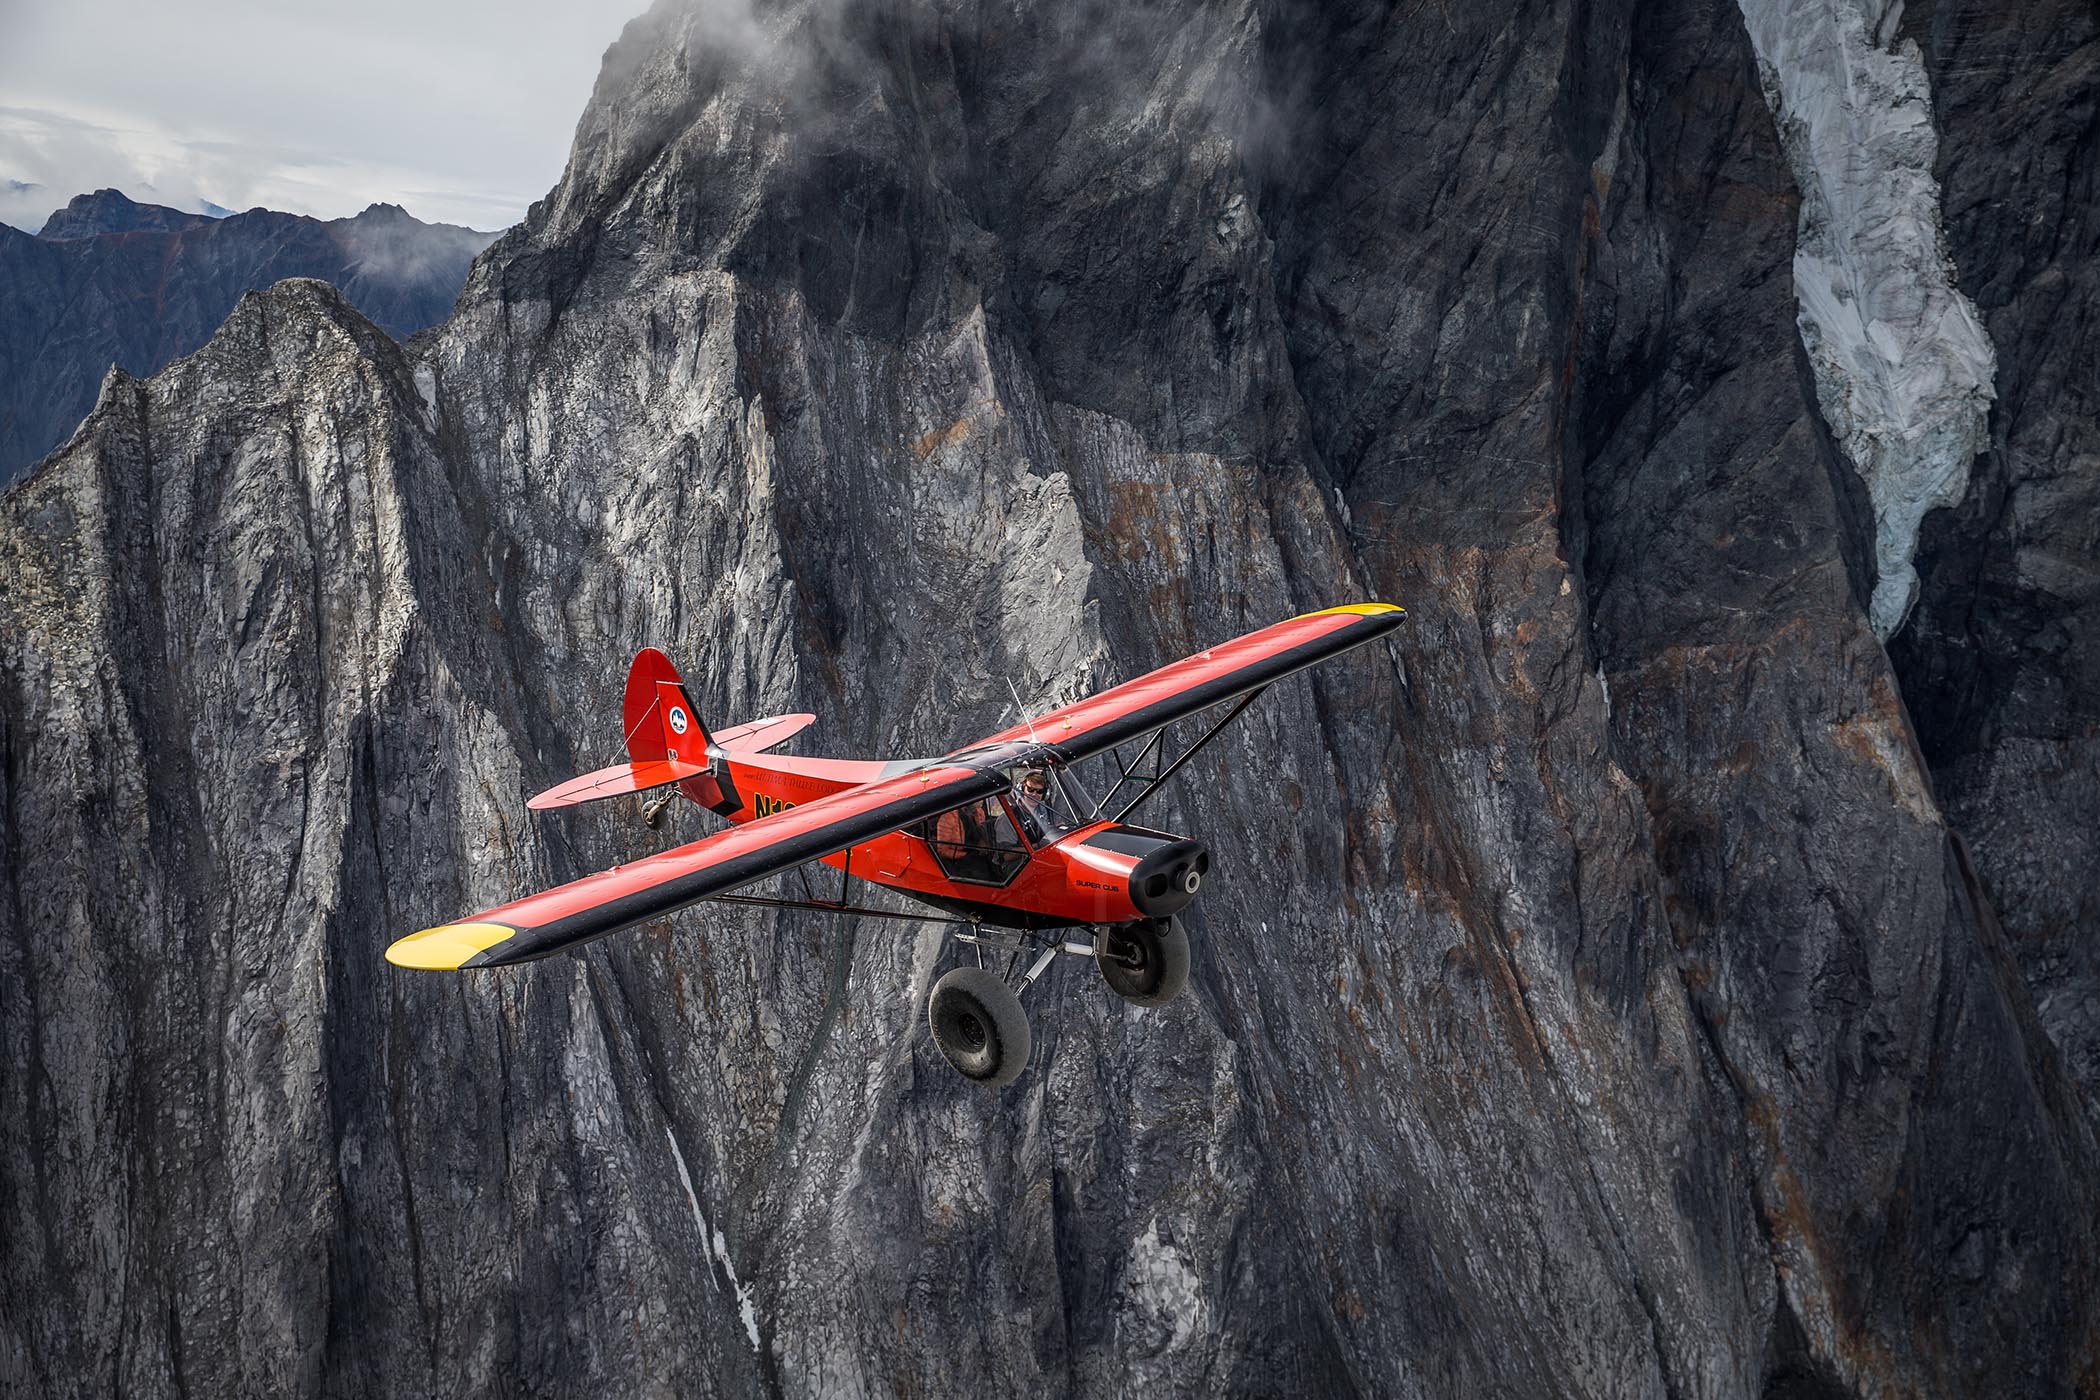 An epic Alaskan flying safari